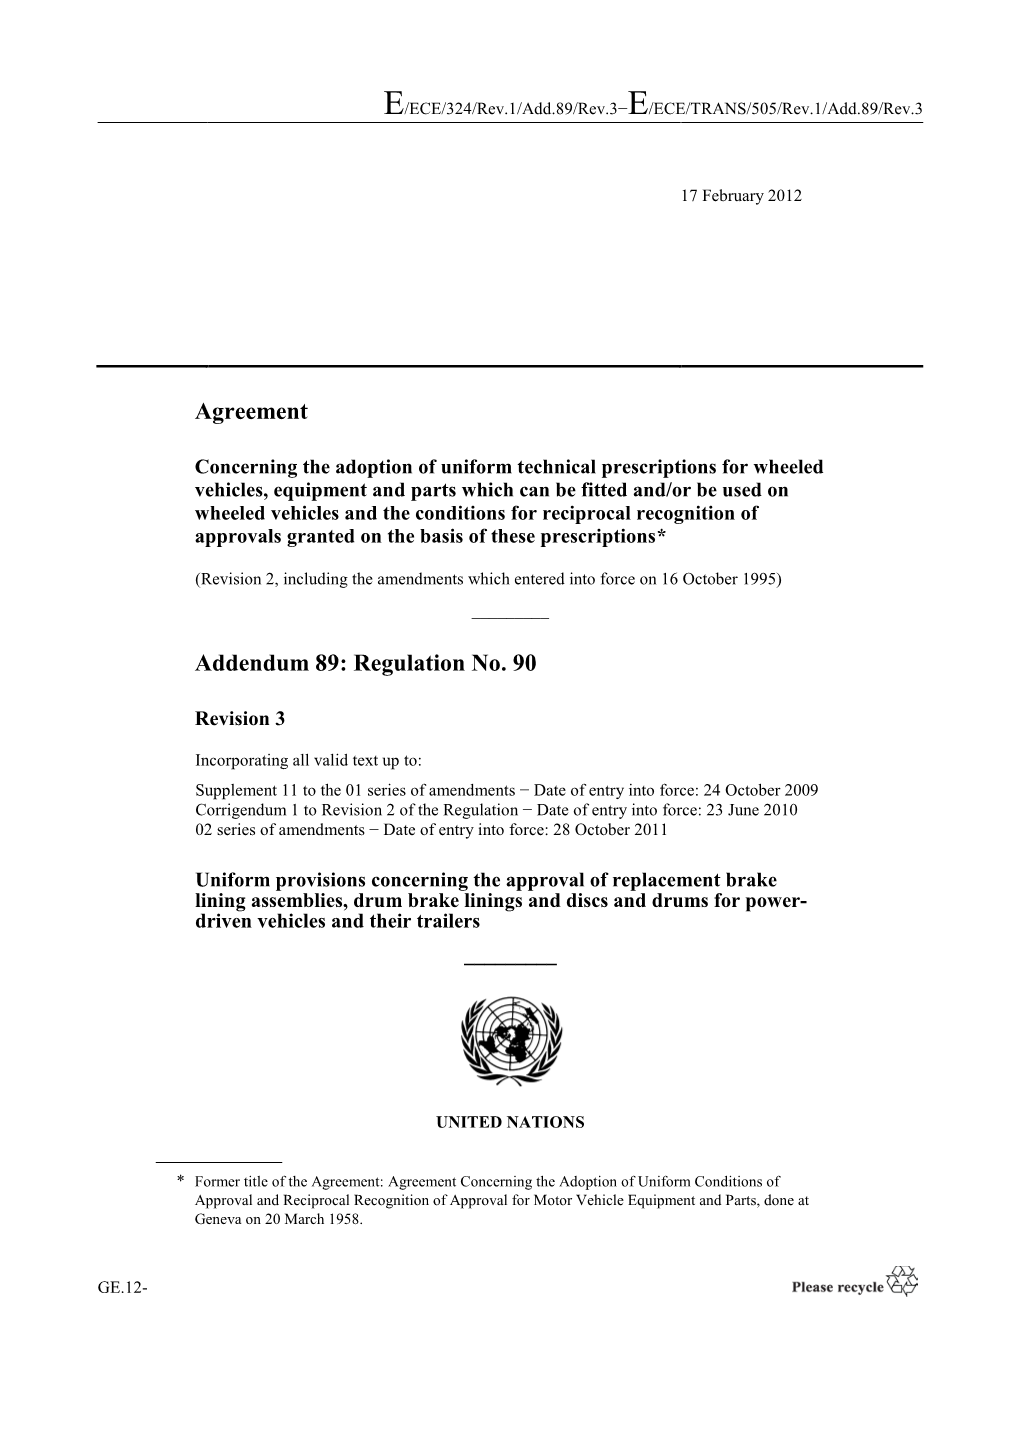 Agreement Addendum 89: Regulation No. 90